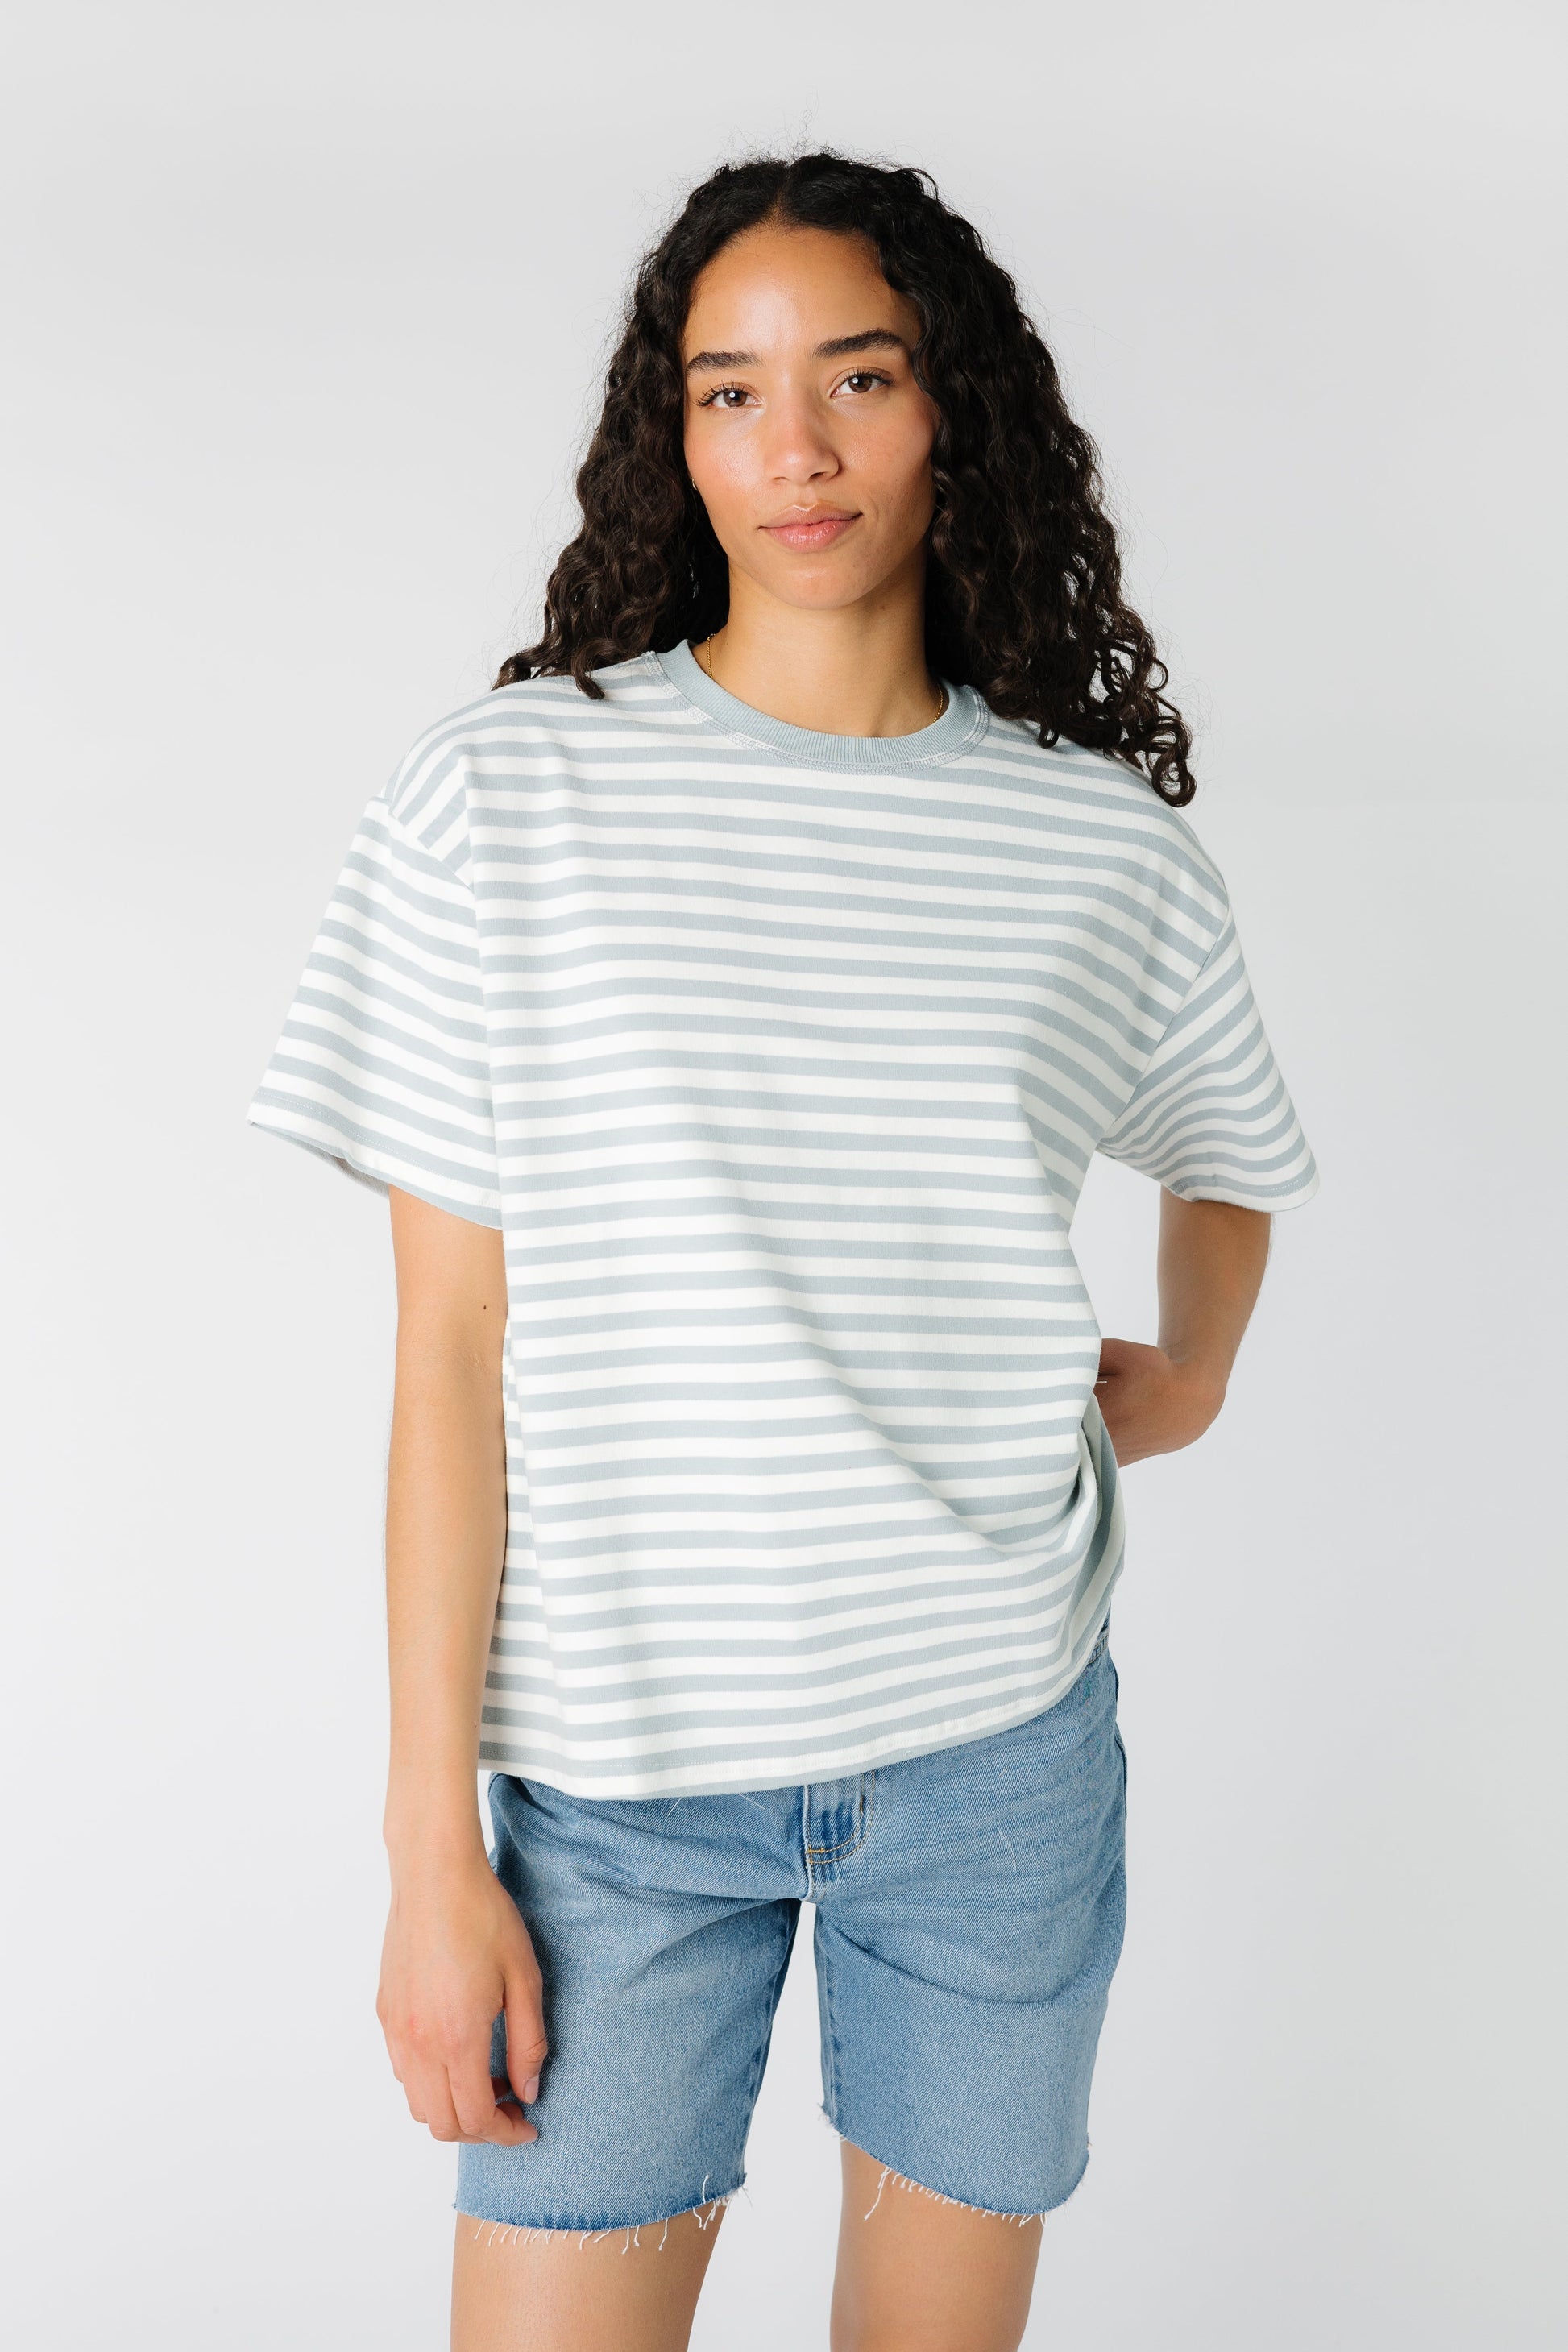 Oversized stripe T-shirt - Mustard & Dusty Blue WOMEN'S T-SHIRT Things Between 